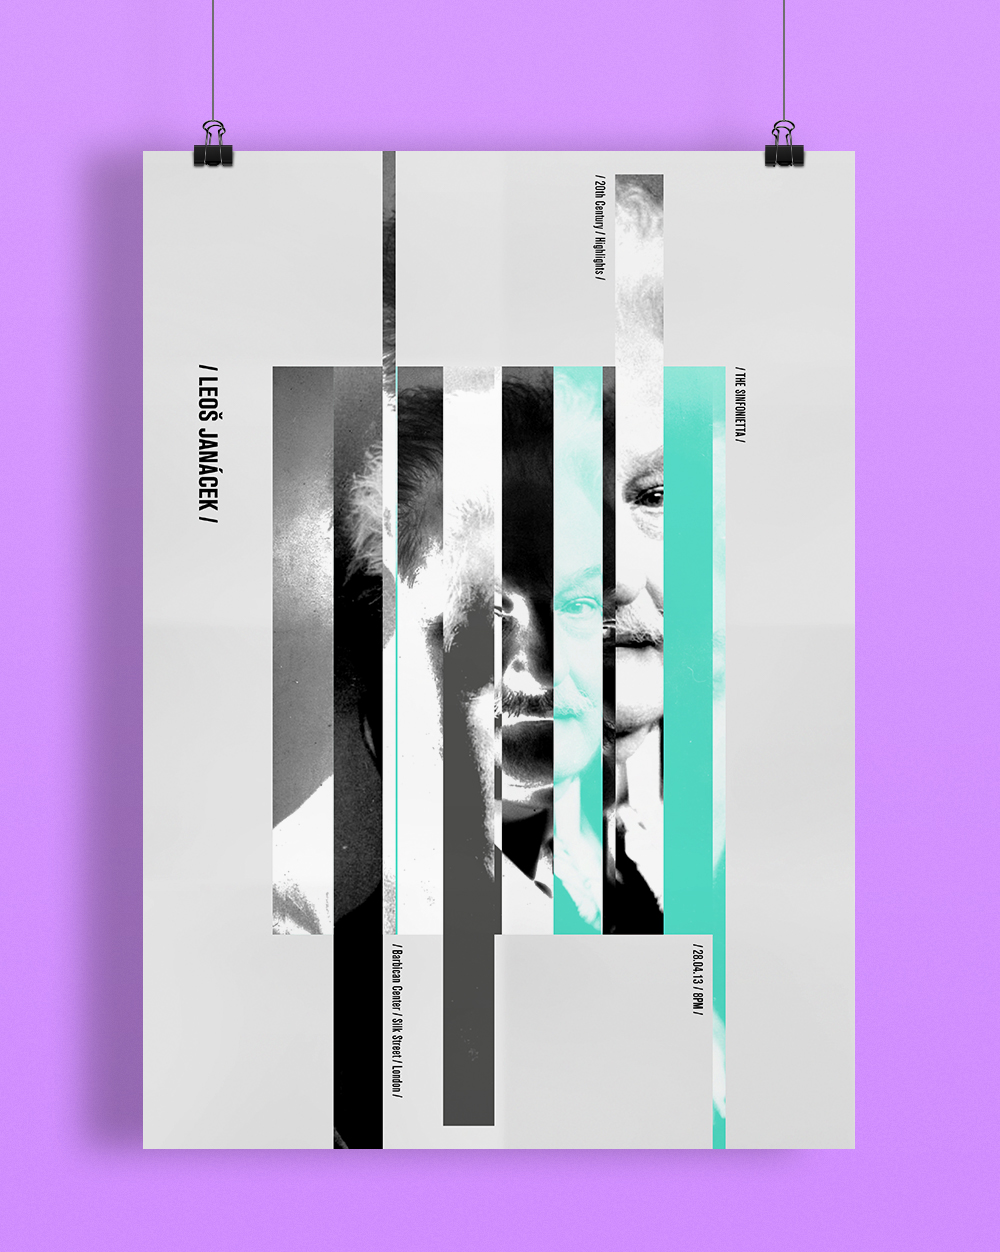 Poster Design music poster Leos Janácek  photo collage Minimalism Scandinavian design Expression handmade typo classic music turquoise grey purple fragments